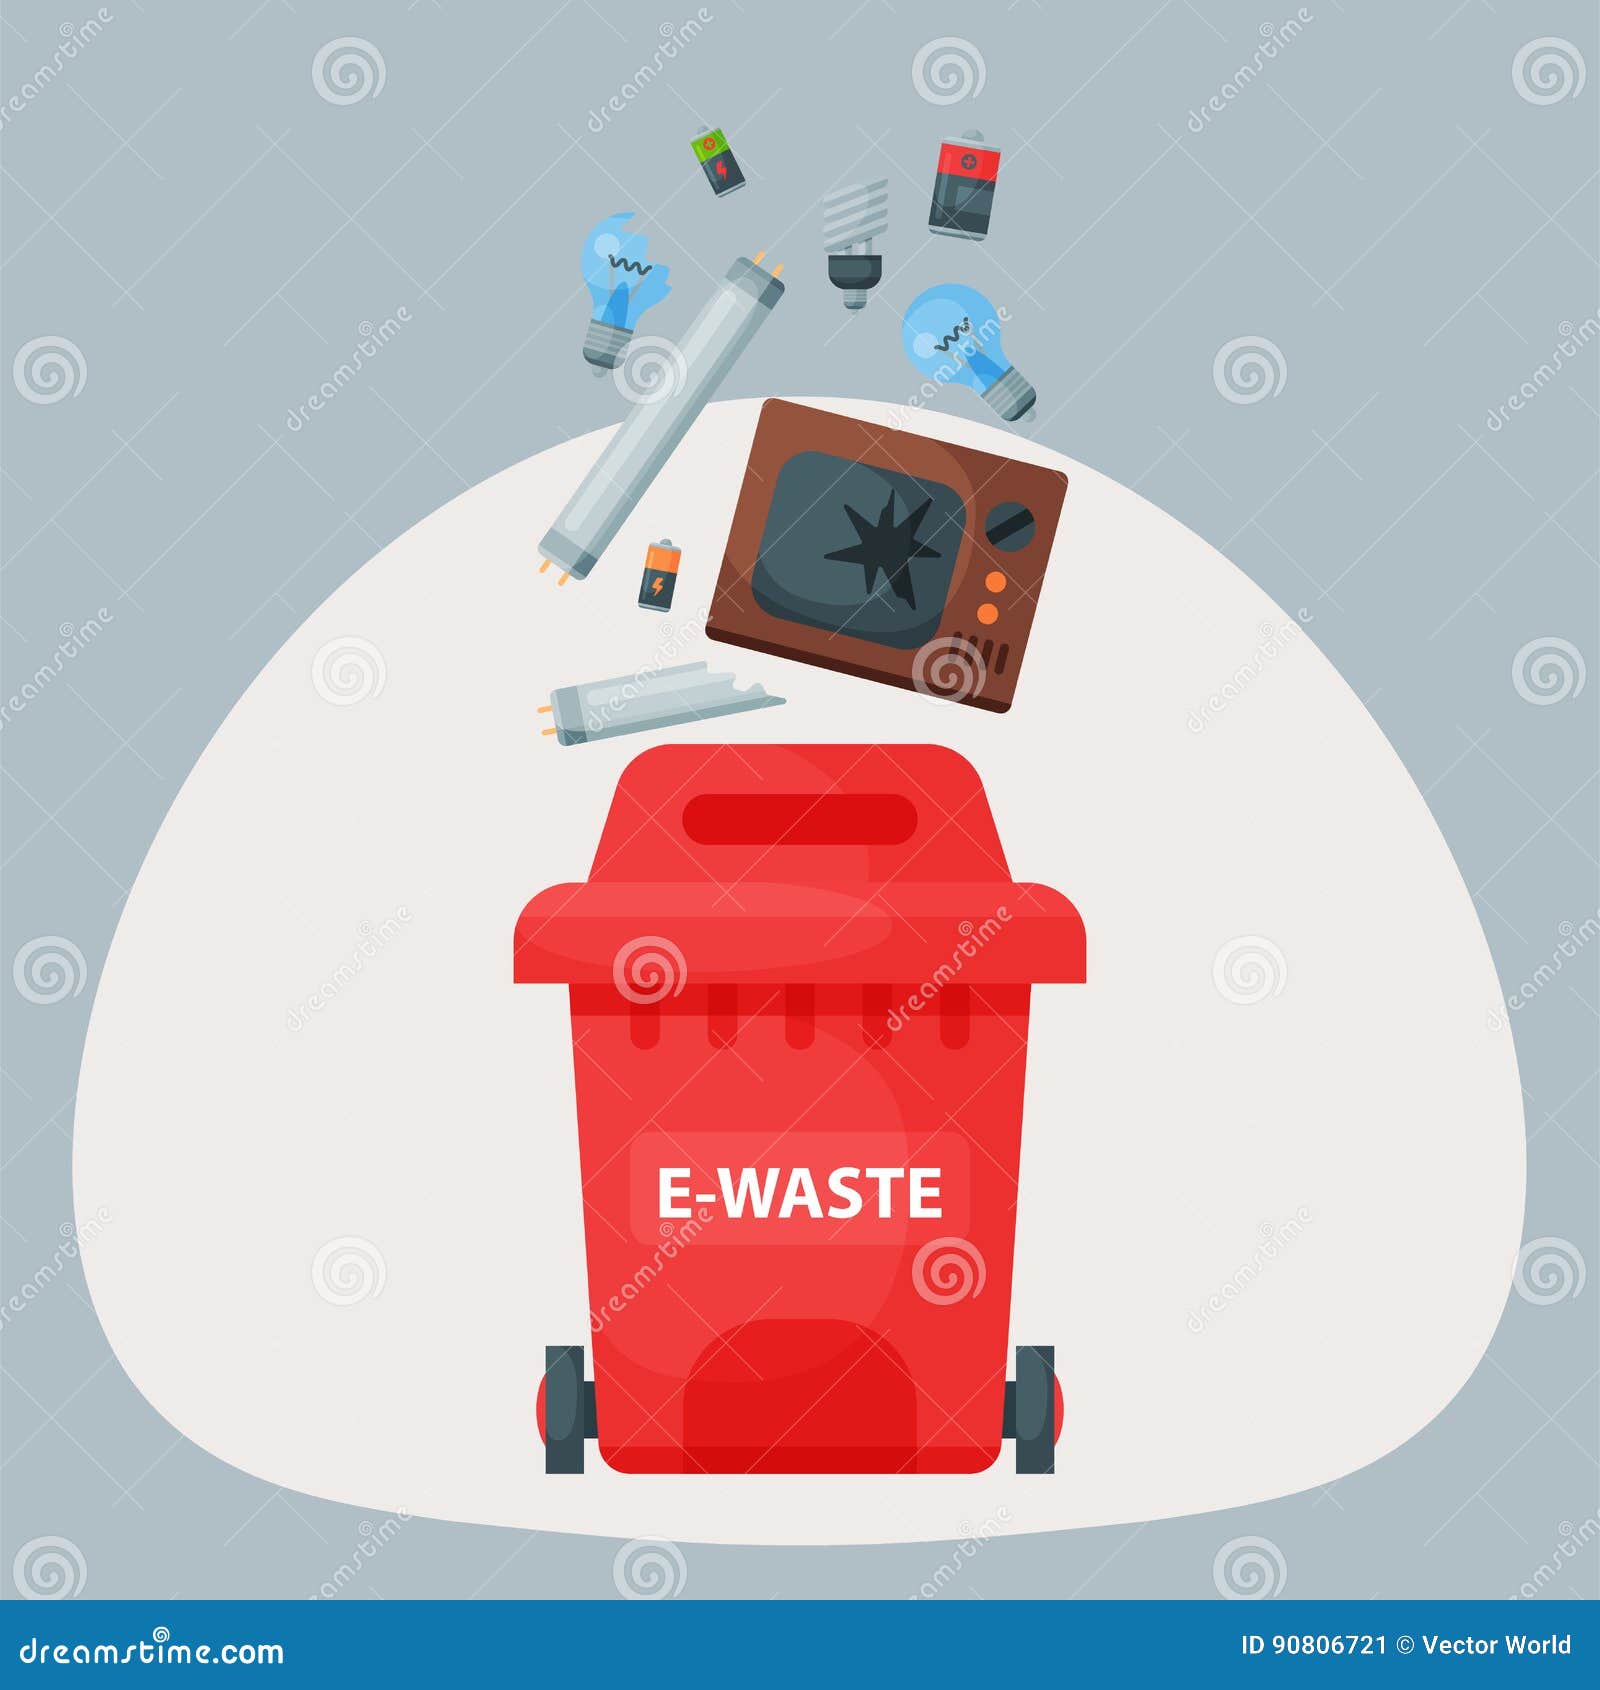 https://thumbs.dreamstime.com/z/recycling-garbage-elements-trash-tires-management-industry-utilize-e-waste-can-vector-illustration-bag-concept-ecology-bottle-90806721.jpg